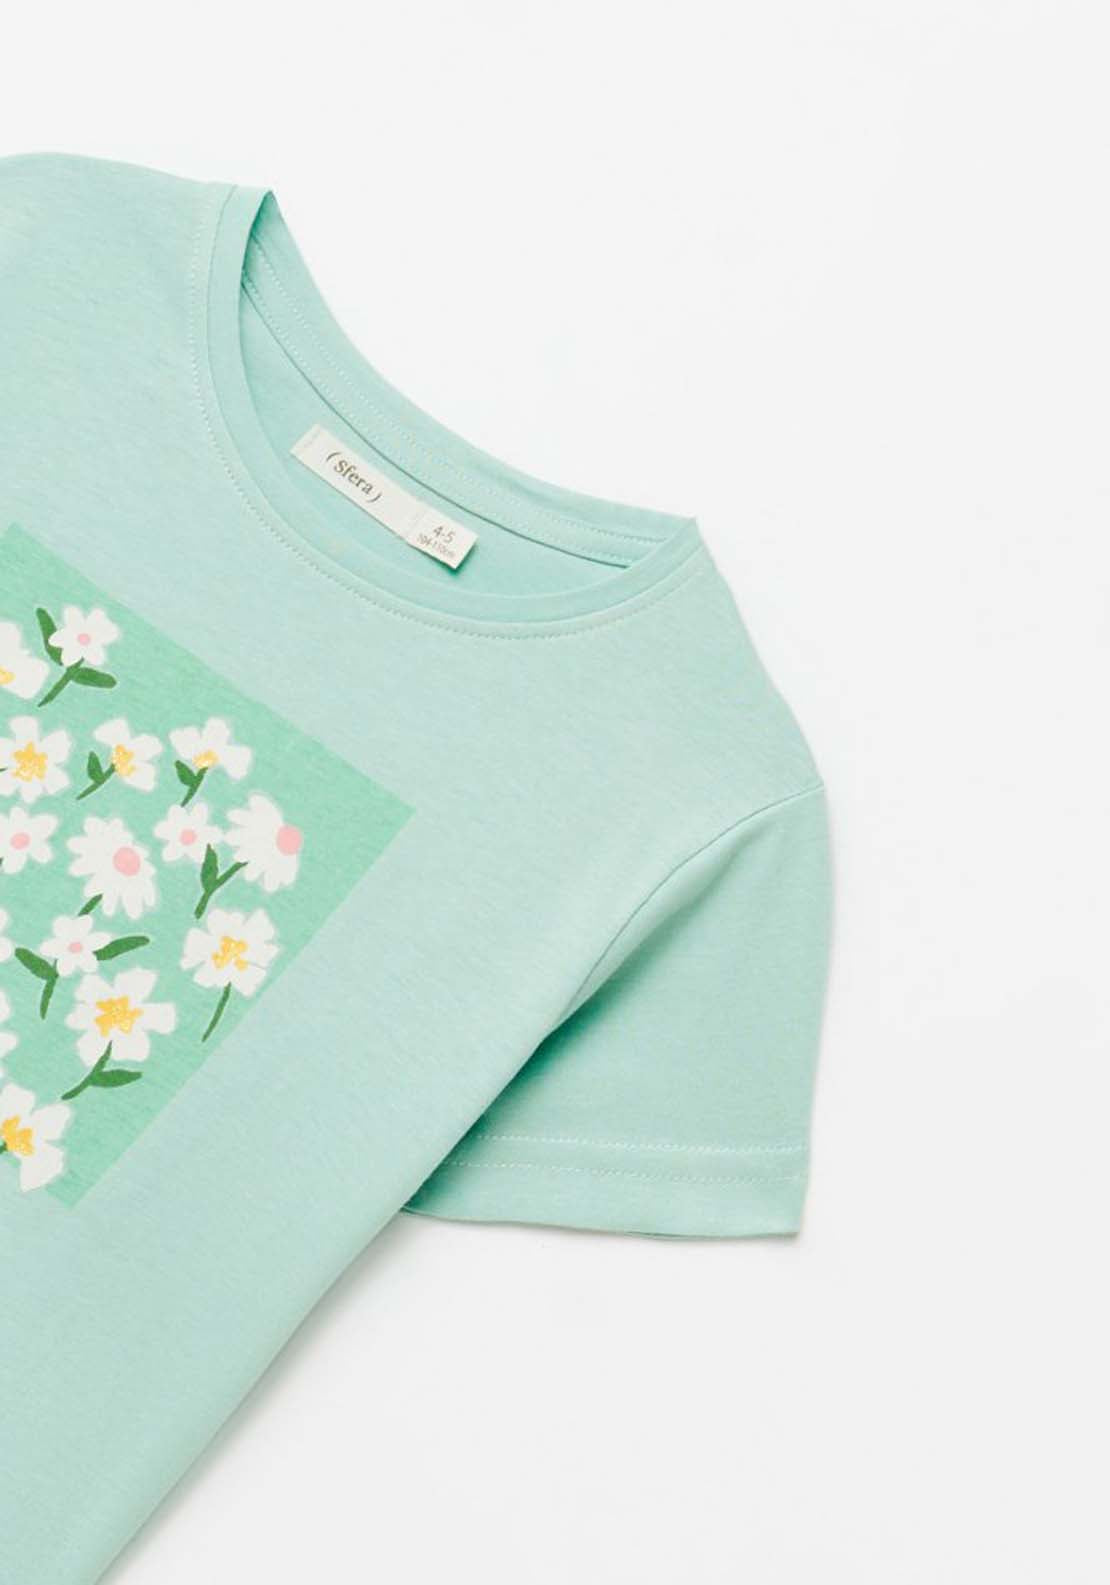 Sfera Flower Print T-Shirt - Green 2 Shaws Department Stores